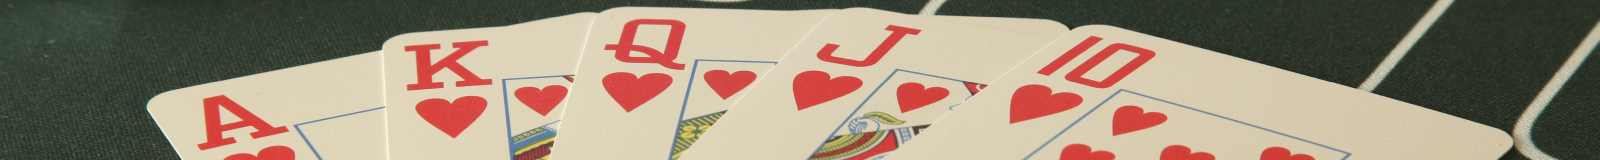 Charity Sponsoren Poker Plauen